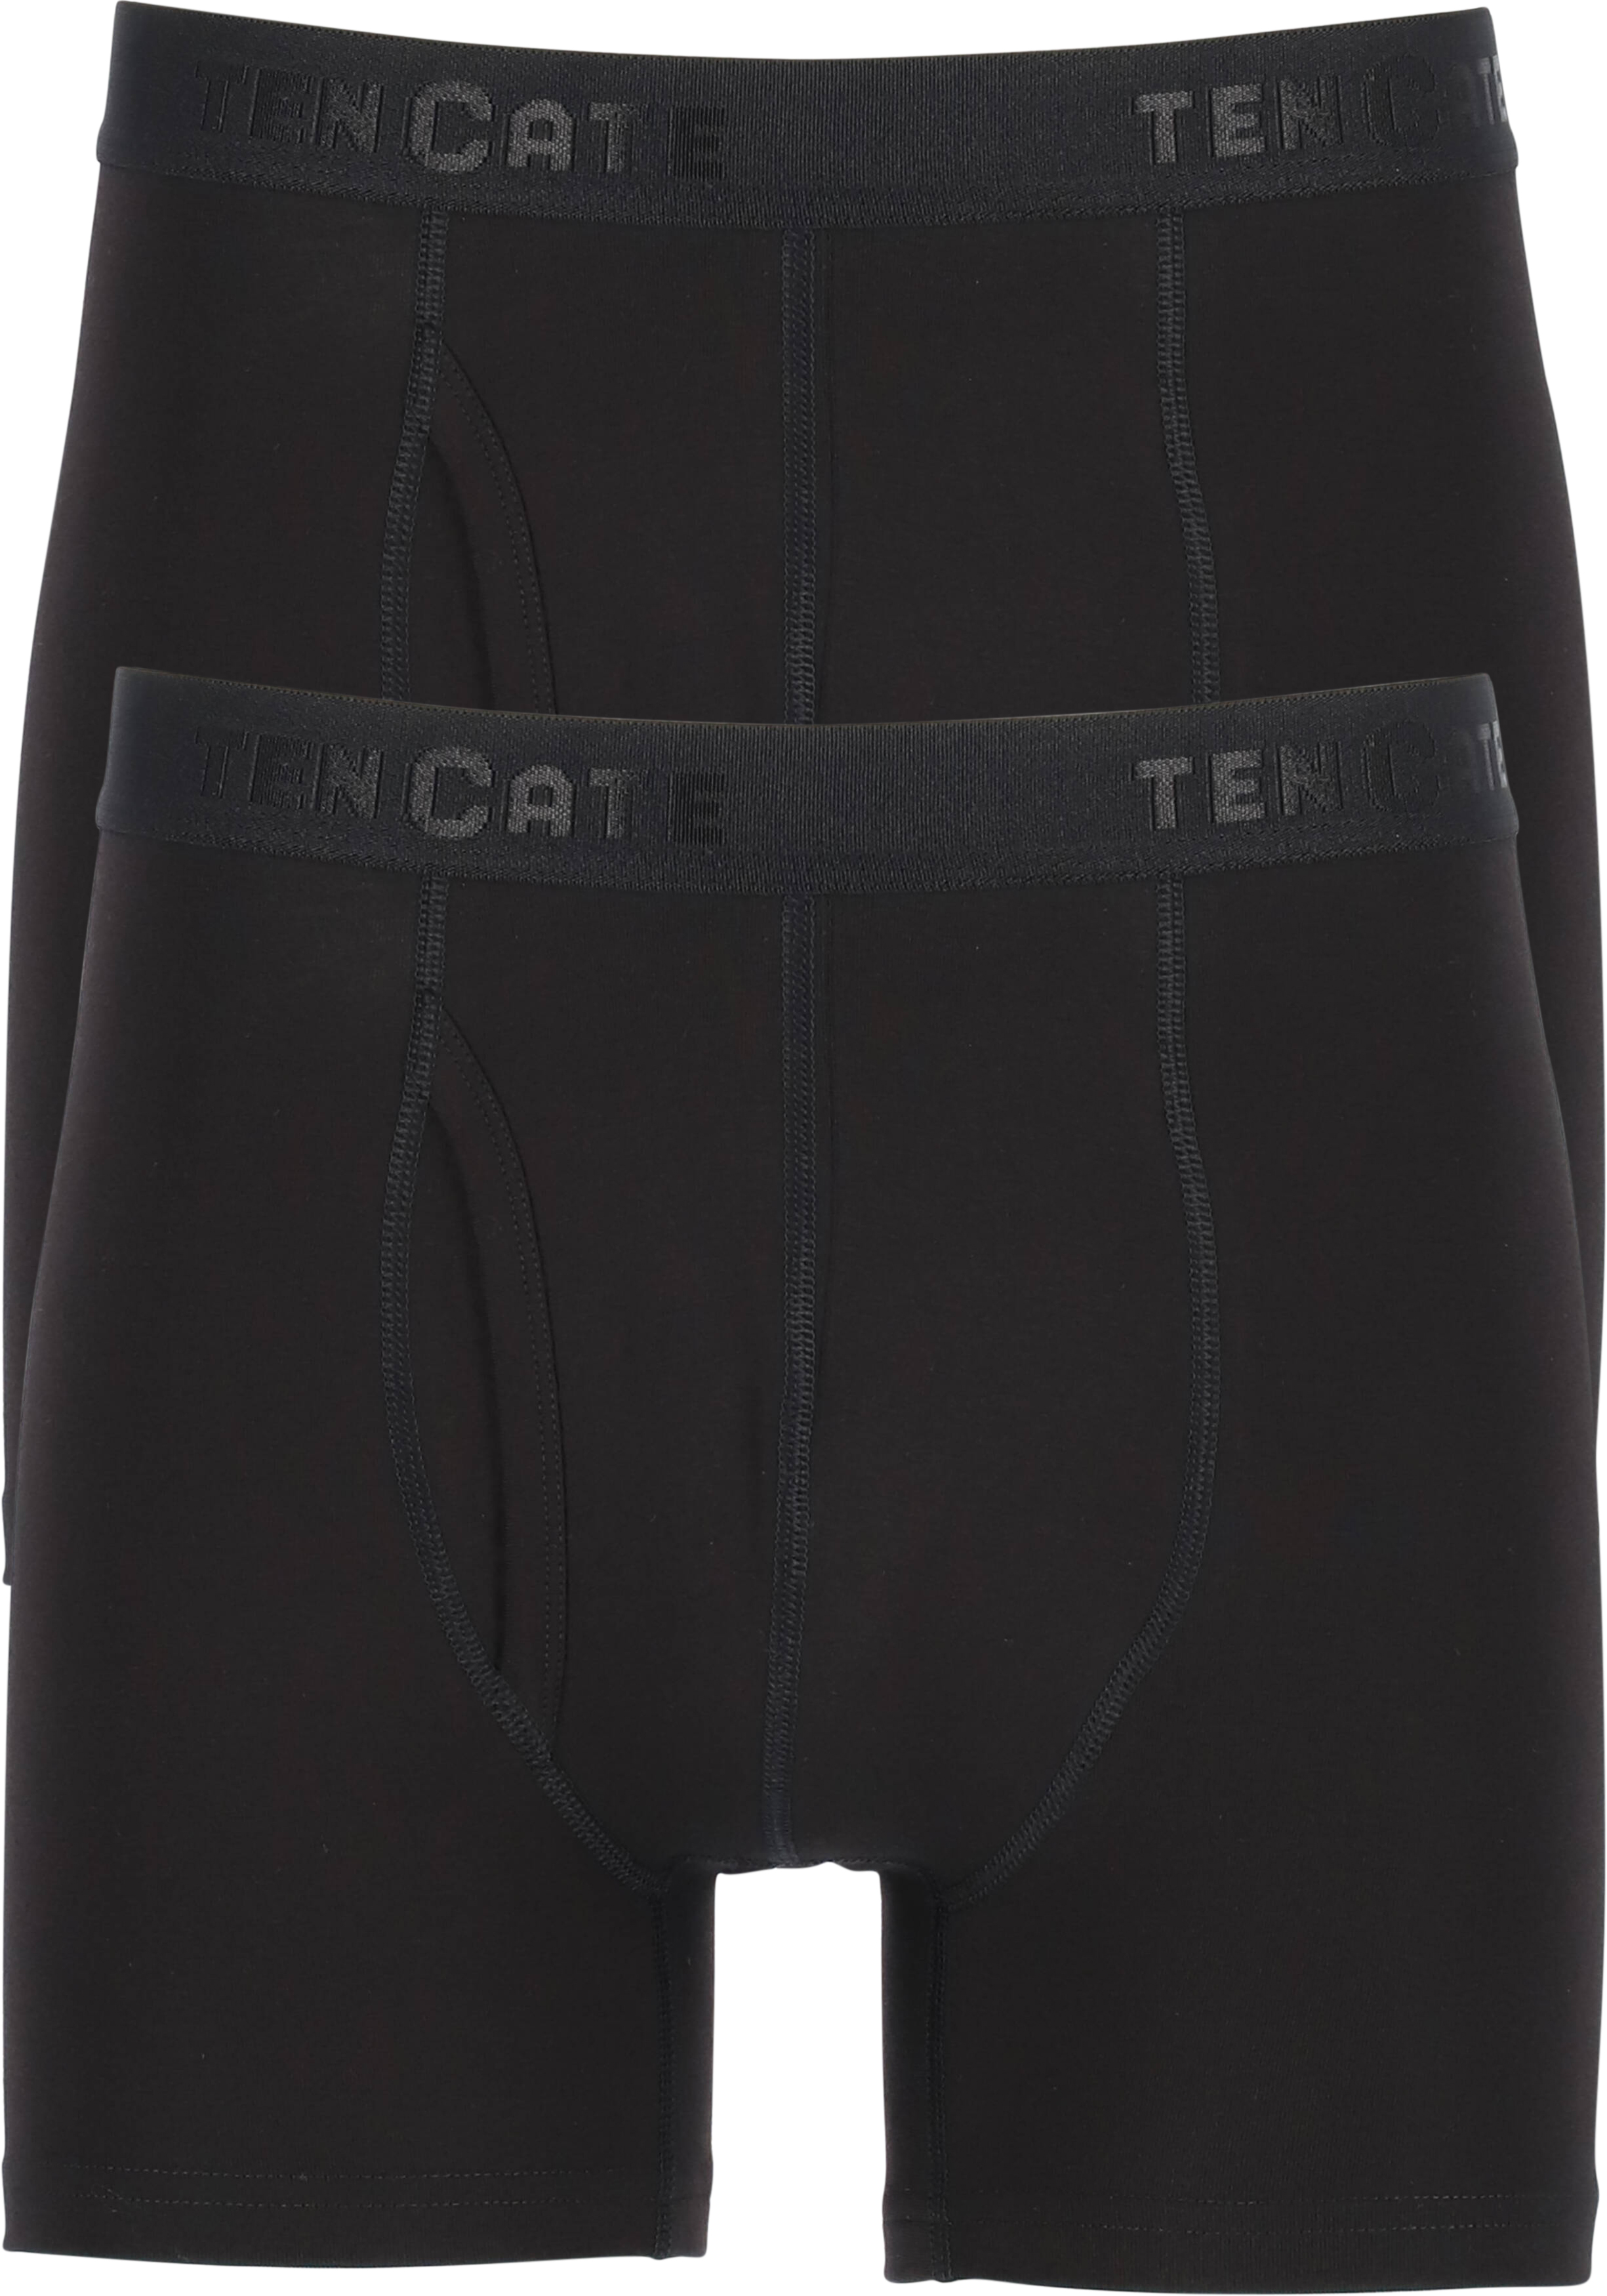 TEN CATE Basics men classic shorts met gulp (2-pack), heren boxers normale lengte, zwart